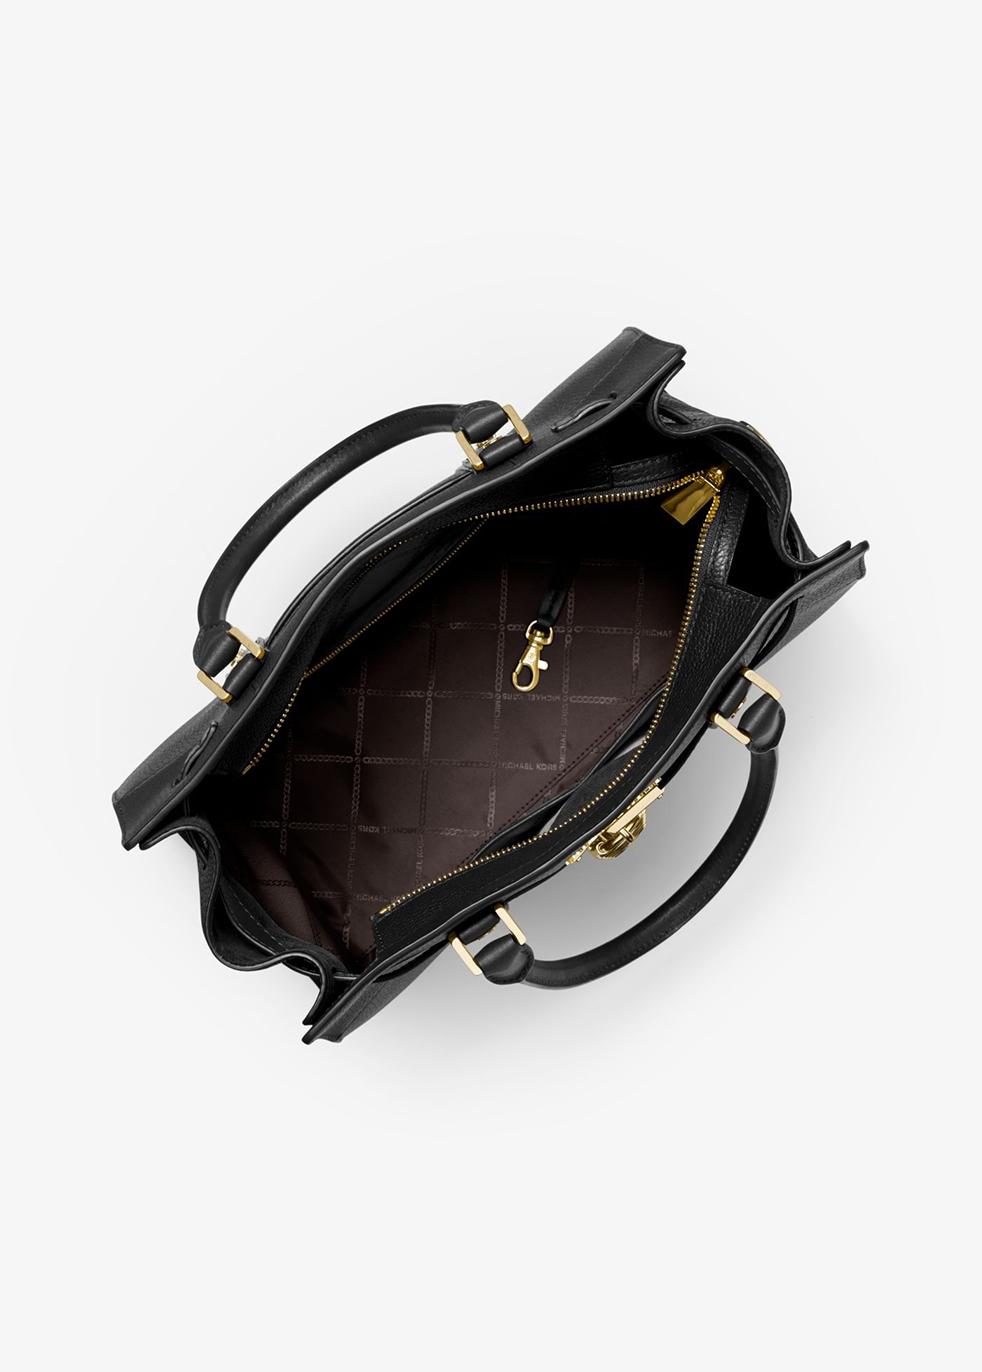 Hamilton leather handbag Michael Kors Black in Leather - 31676583